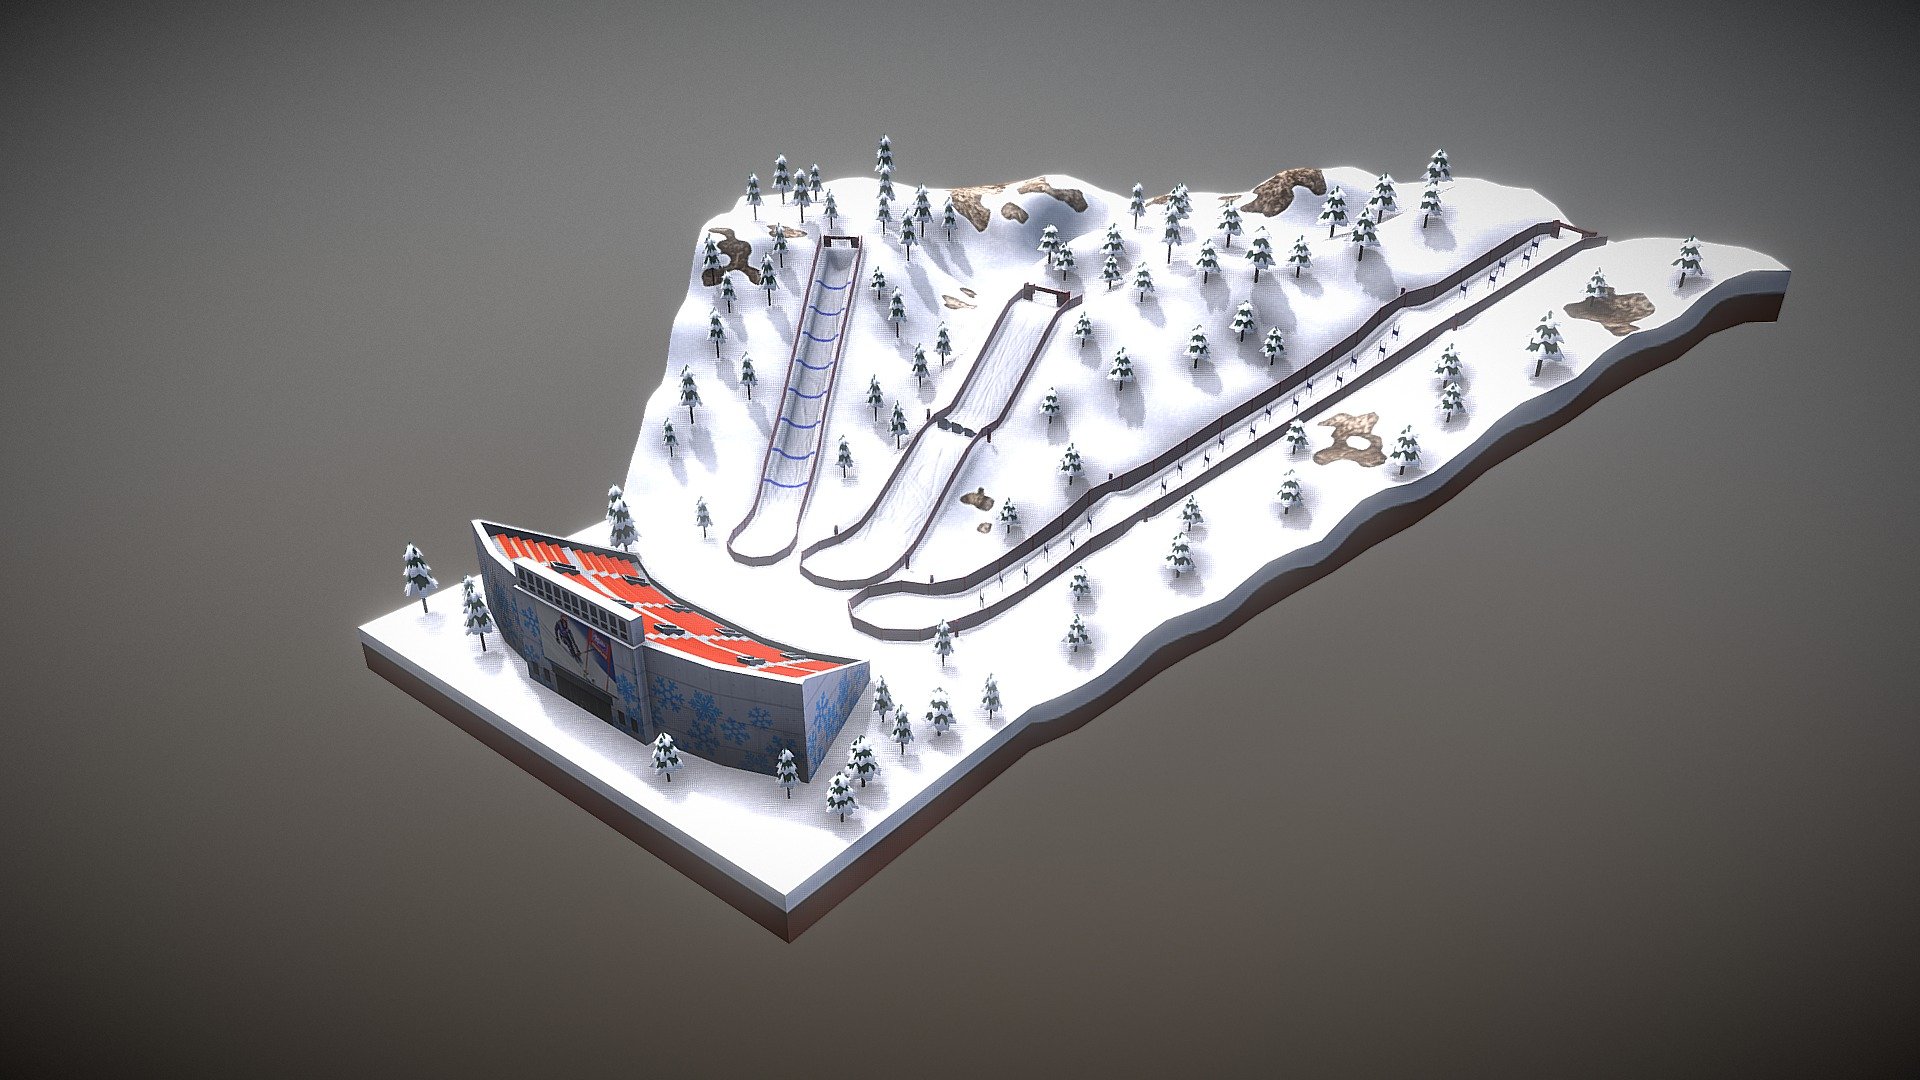 Ski Slope 3D model by pkiller0 cbfebf2 Sketchfab